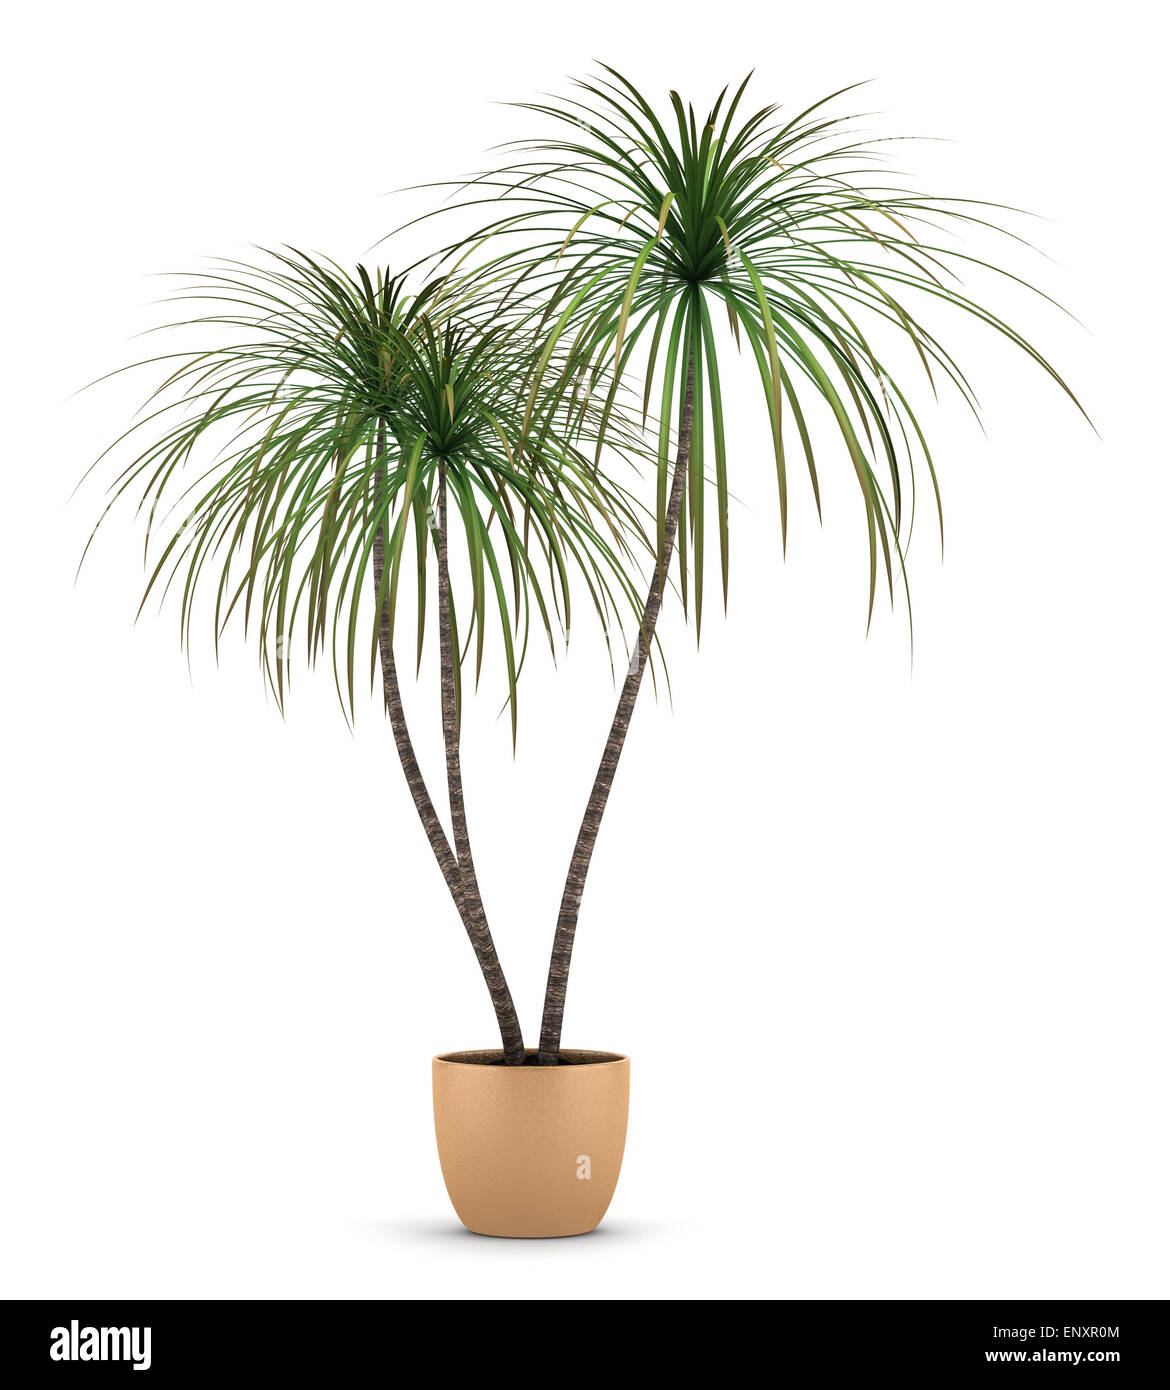 dracaena plant in pot isolated on white background Stock Photo